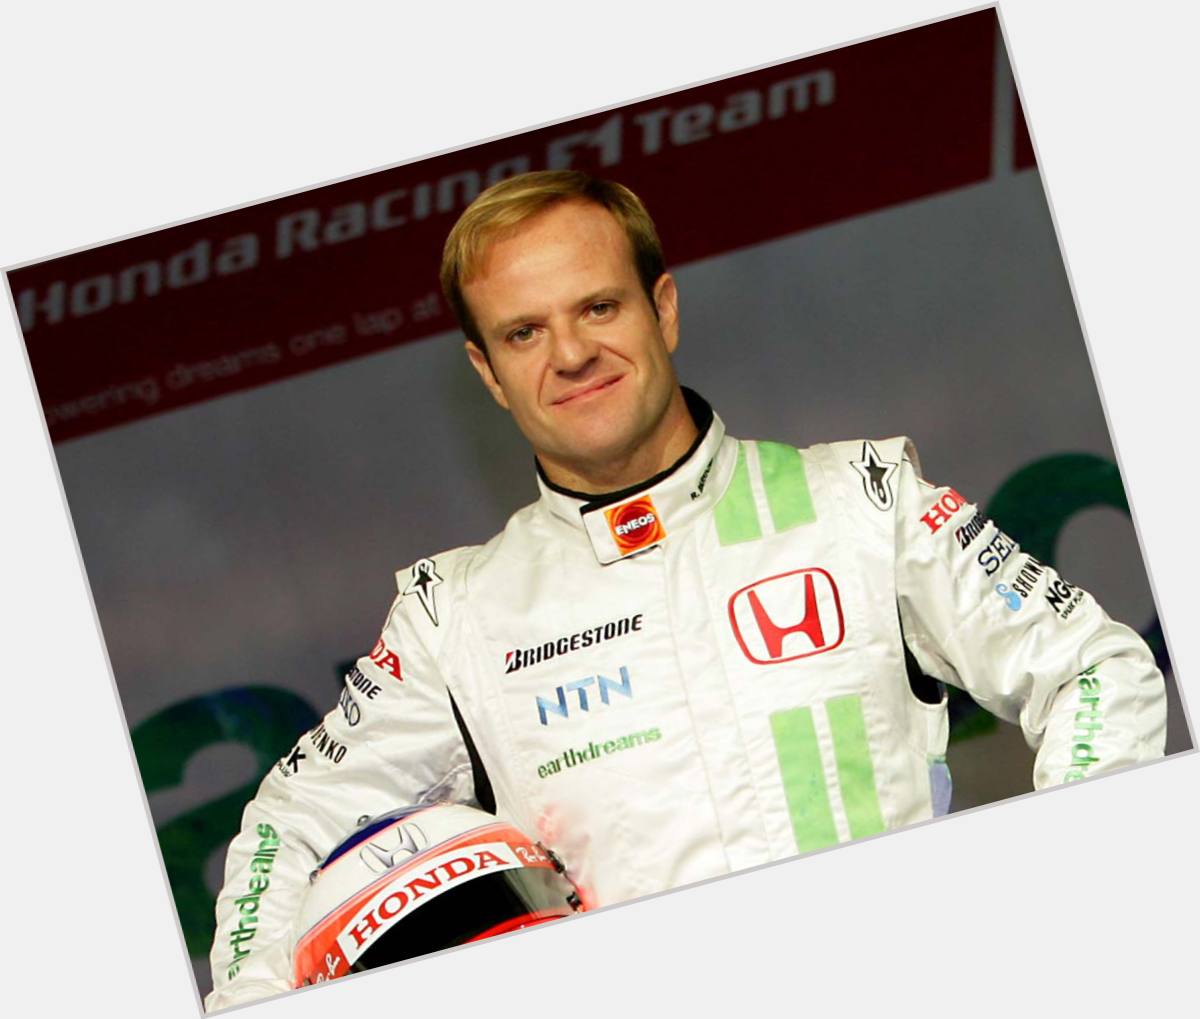 Https://fanpagepress.net/m/R/rubens Barrichello Crash 0